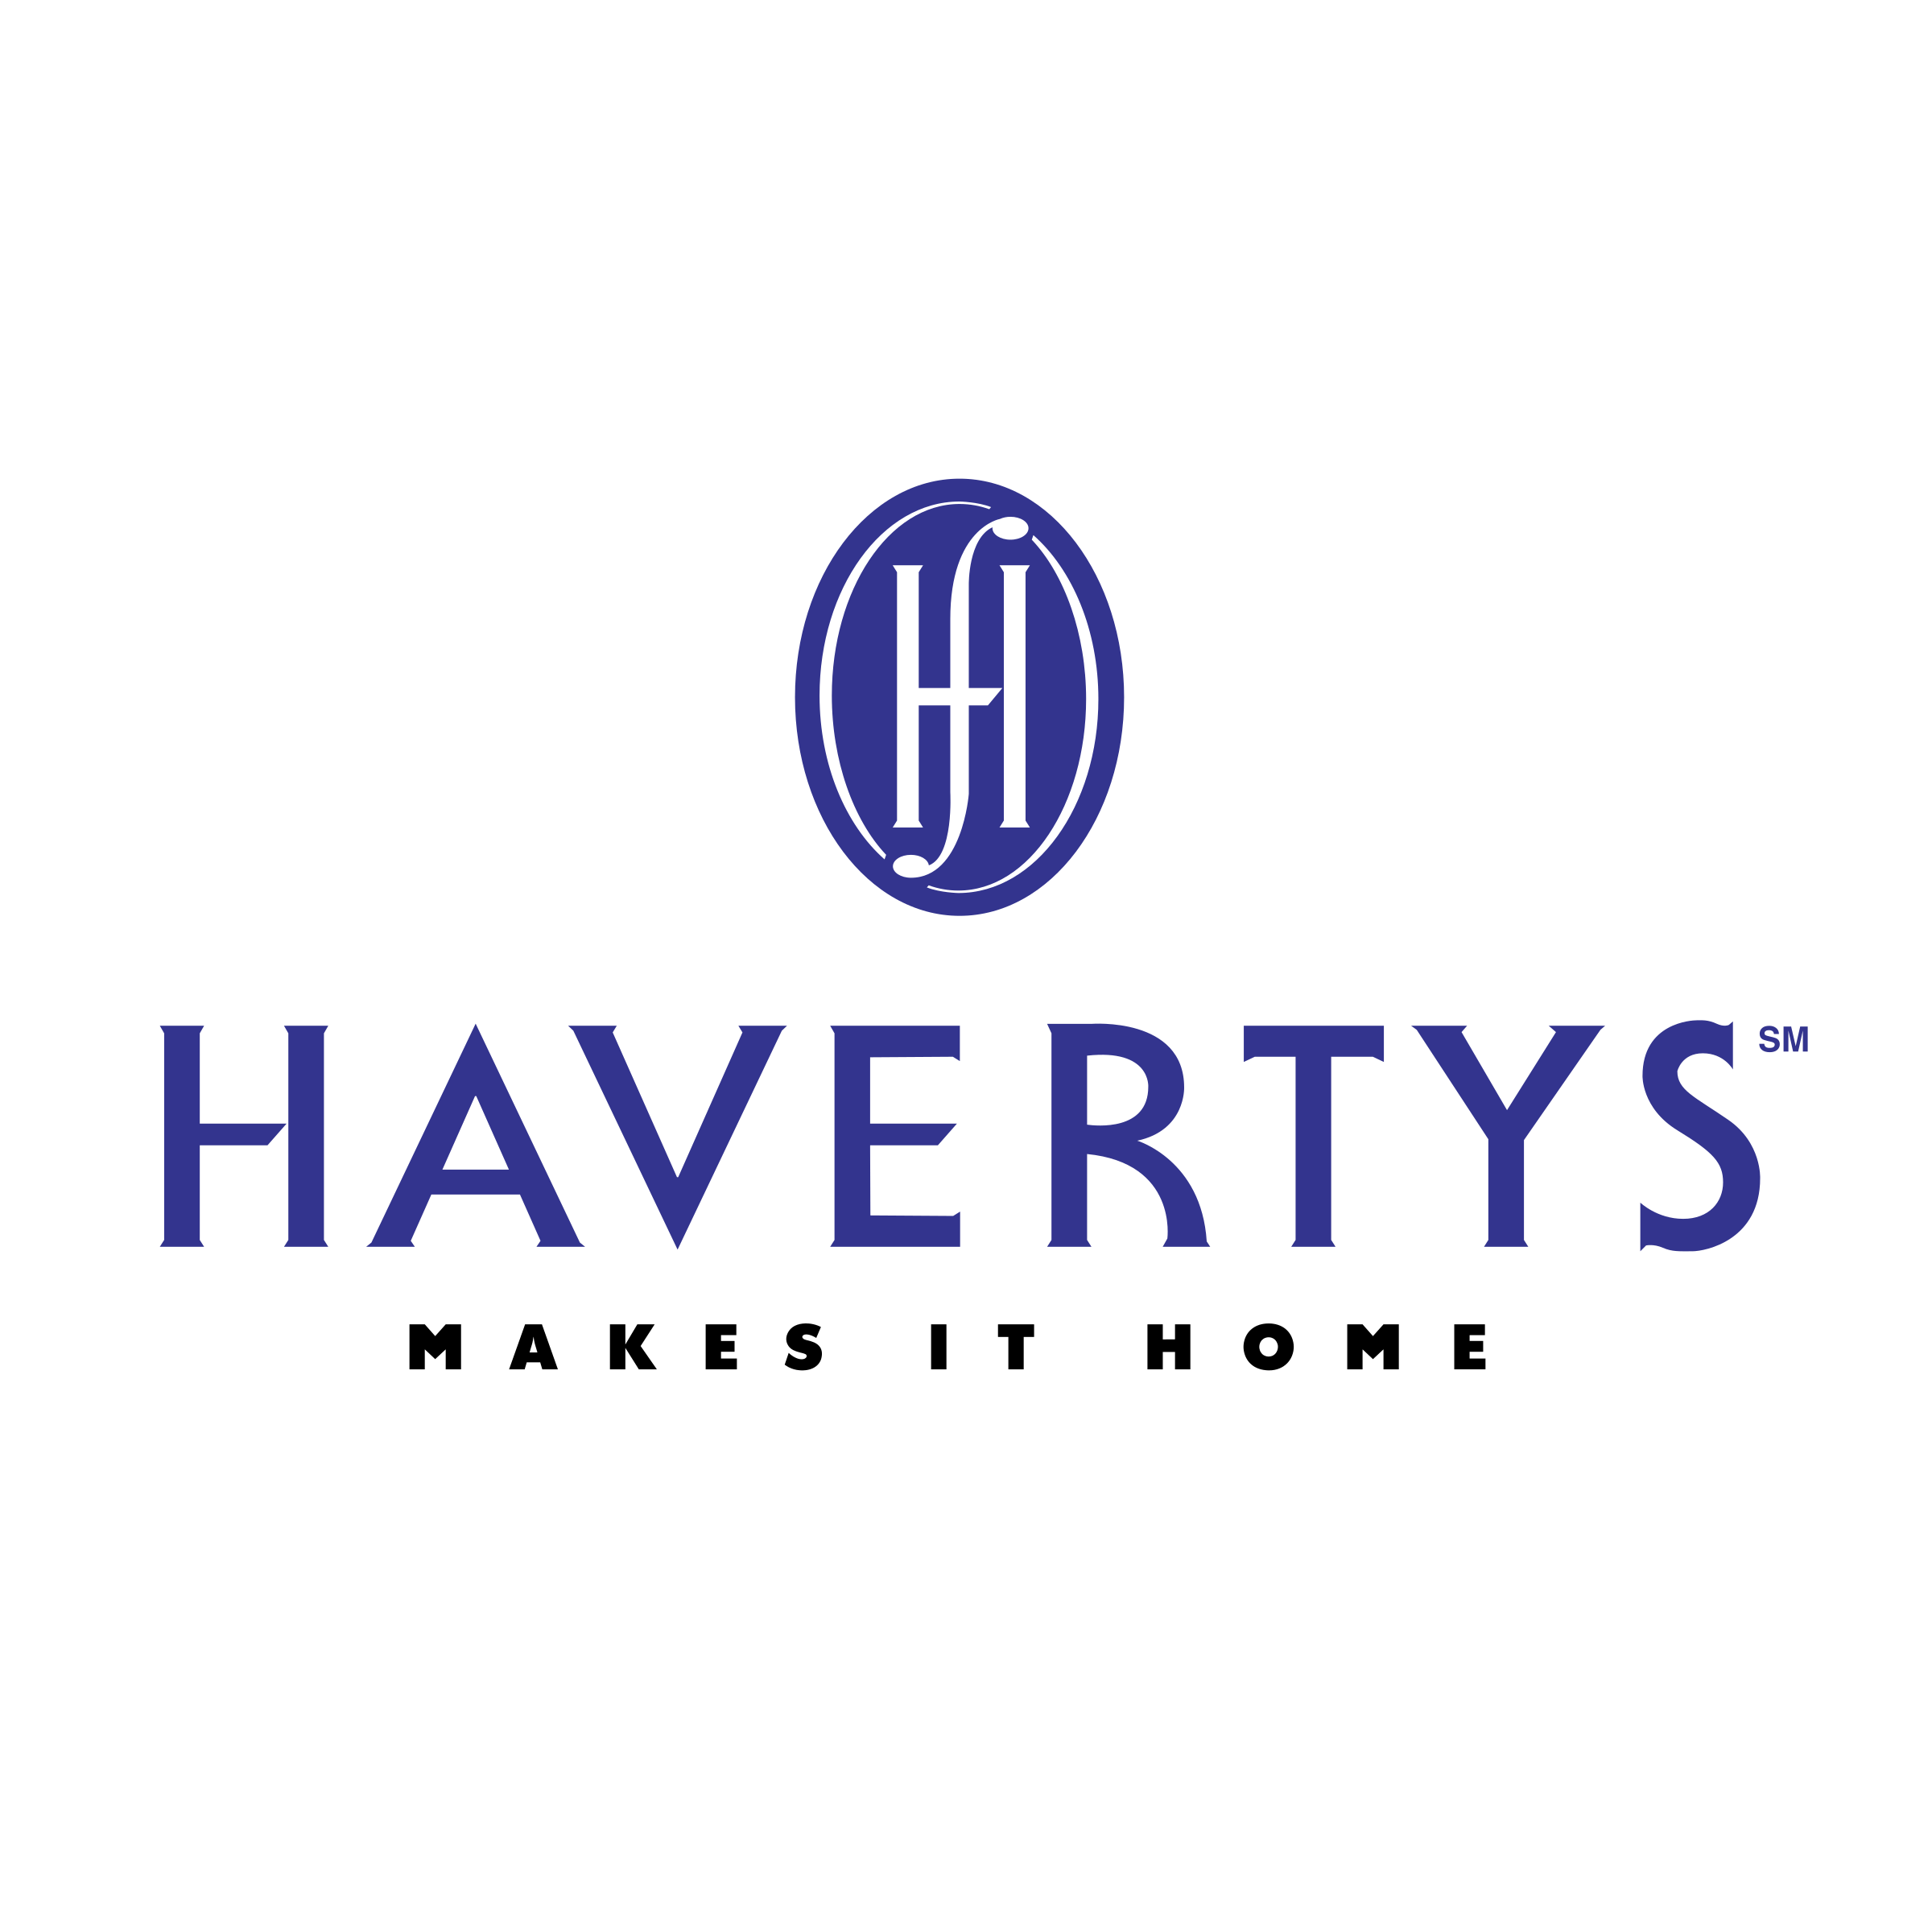 Havertys Logo - Havertys Logo PNG Transparent & SVG Vector - Freebie Supply